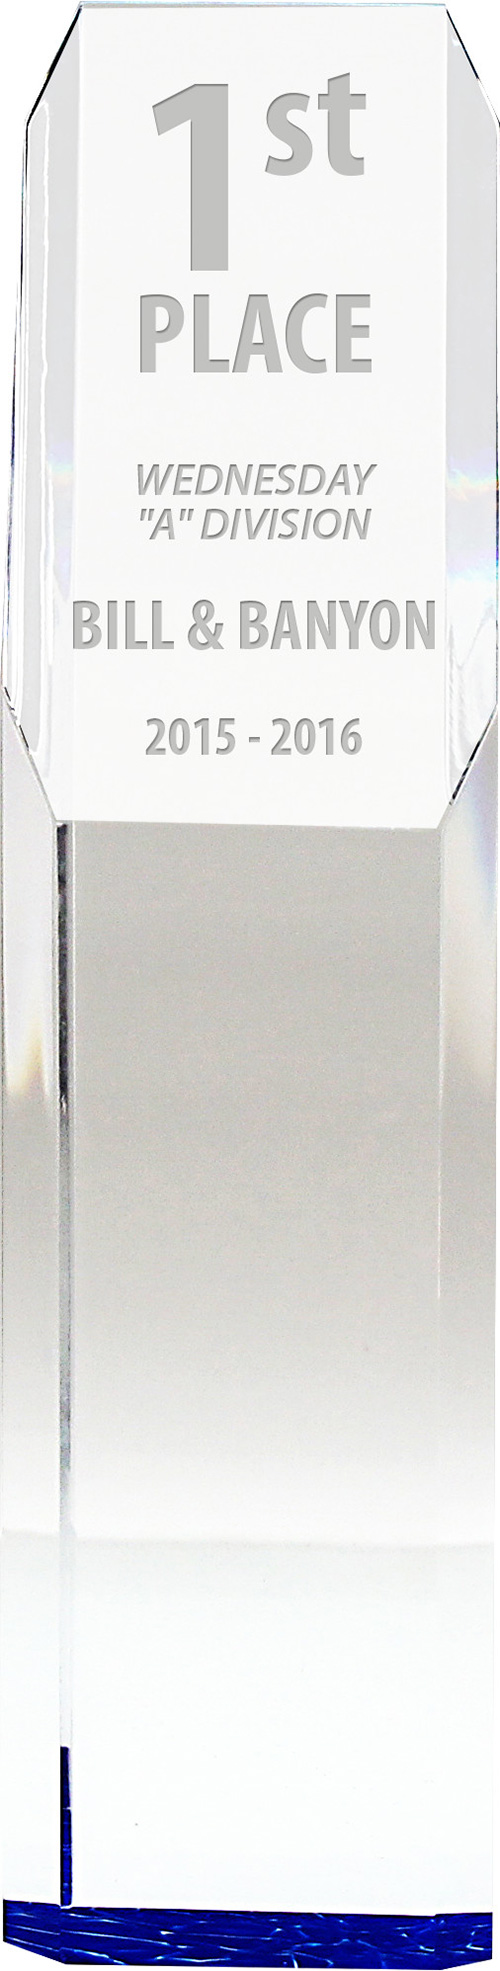 Valenica Acrylic Award - 10 inch